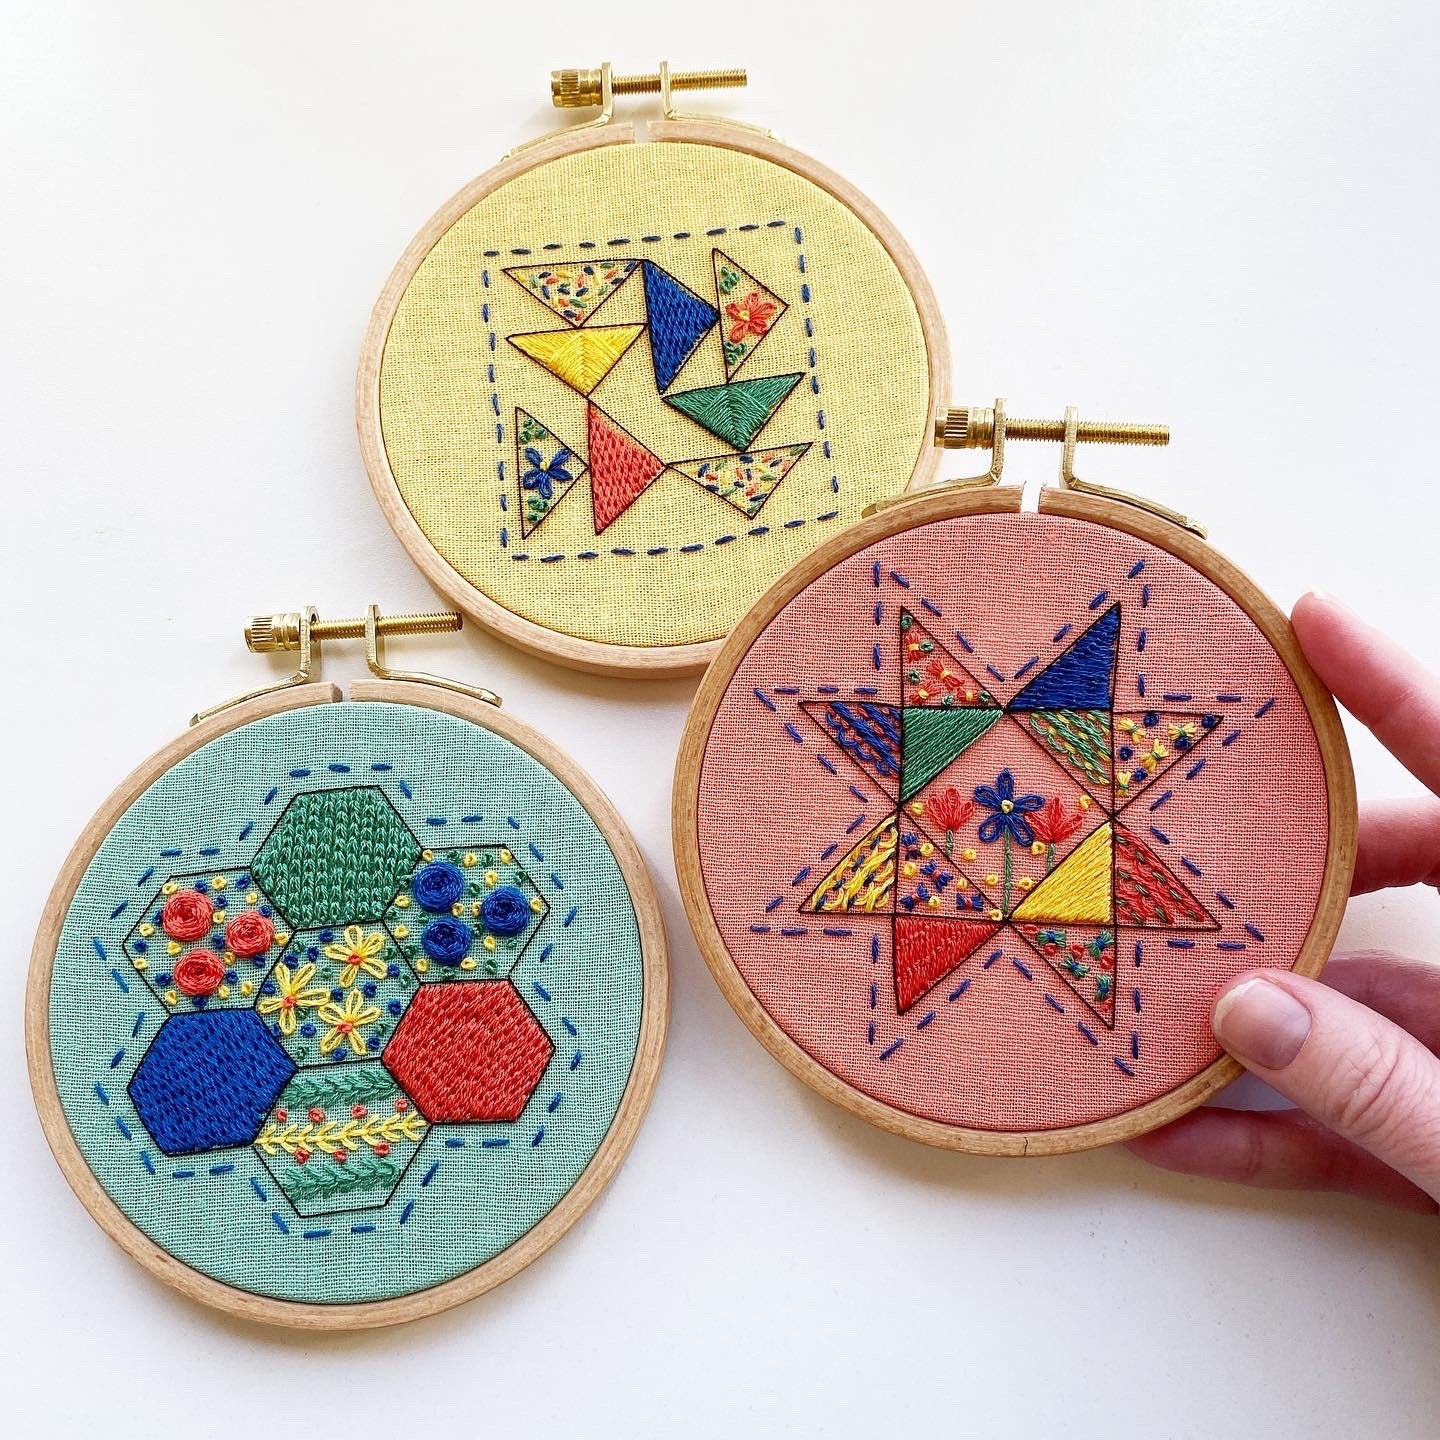 Hexie Harmony: Beginner Embroidery Kit